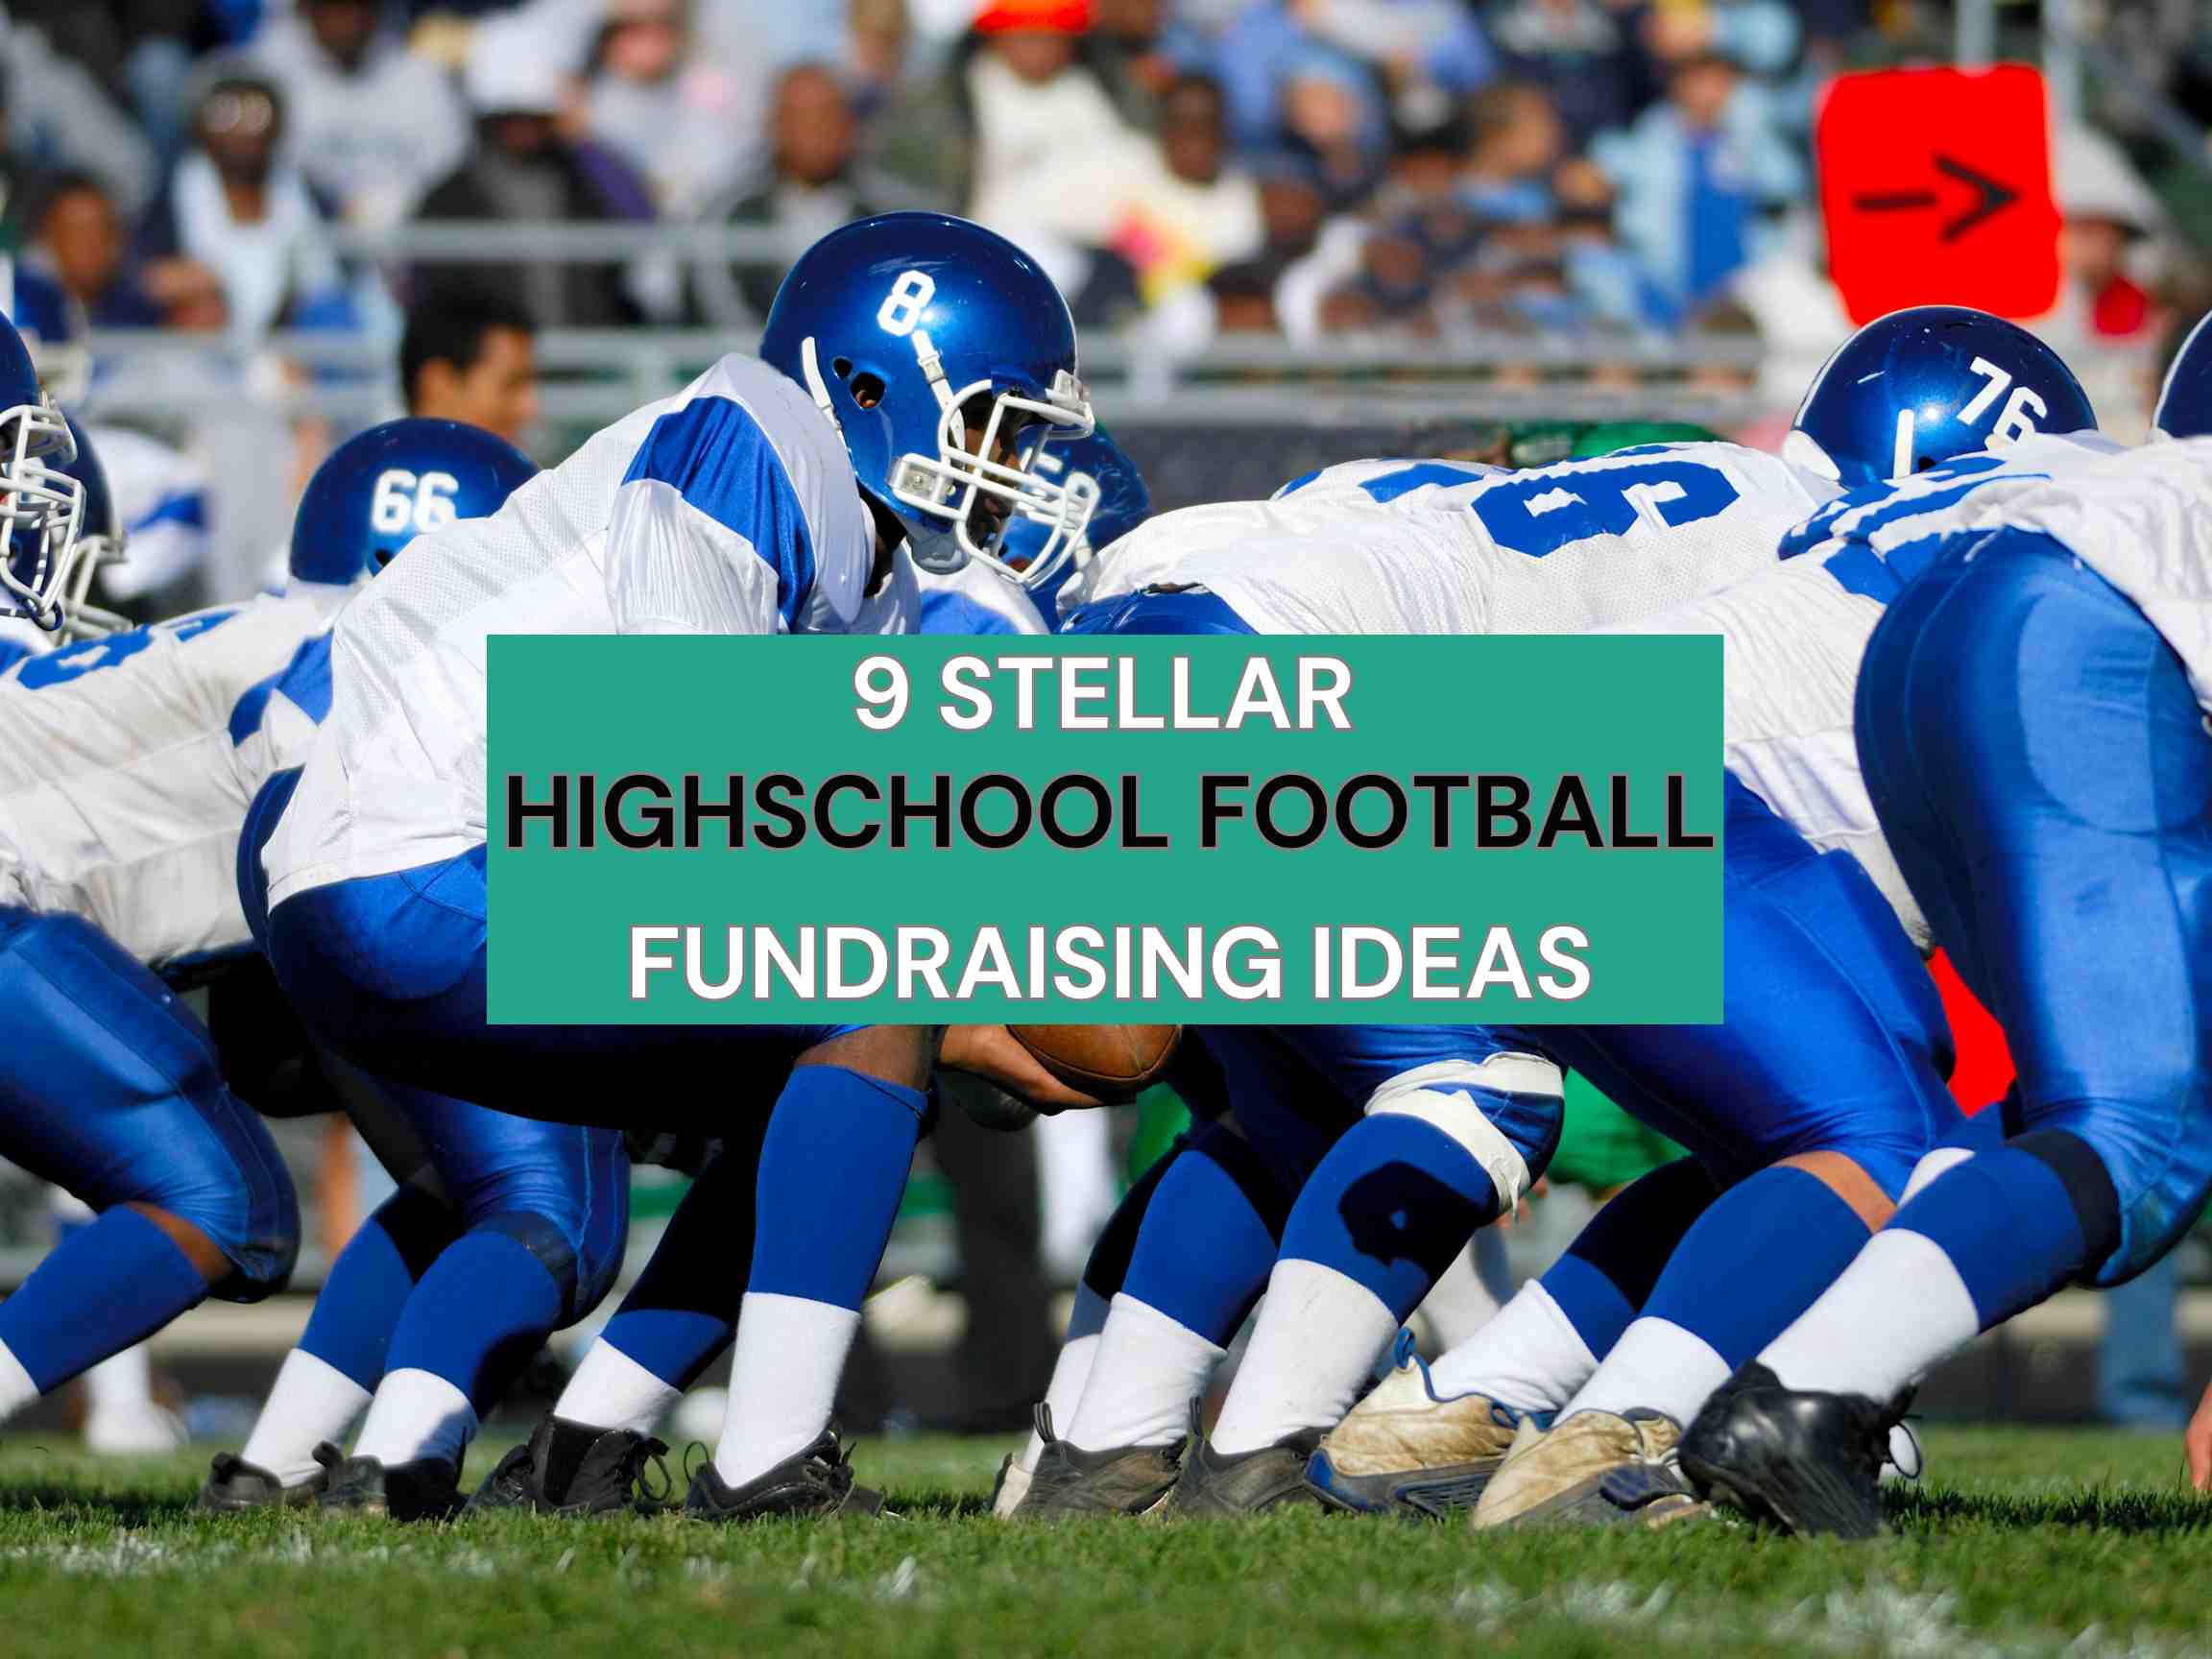 Highschool football fundraising ideas